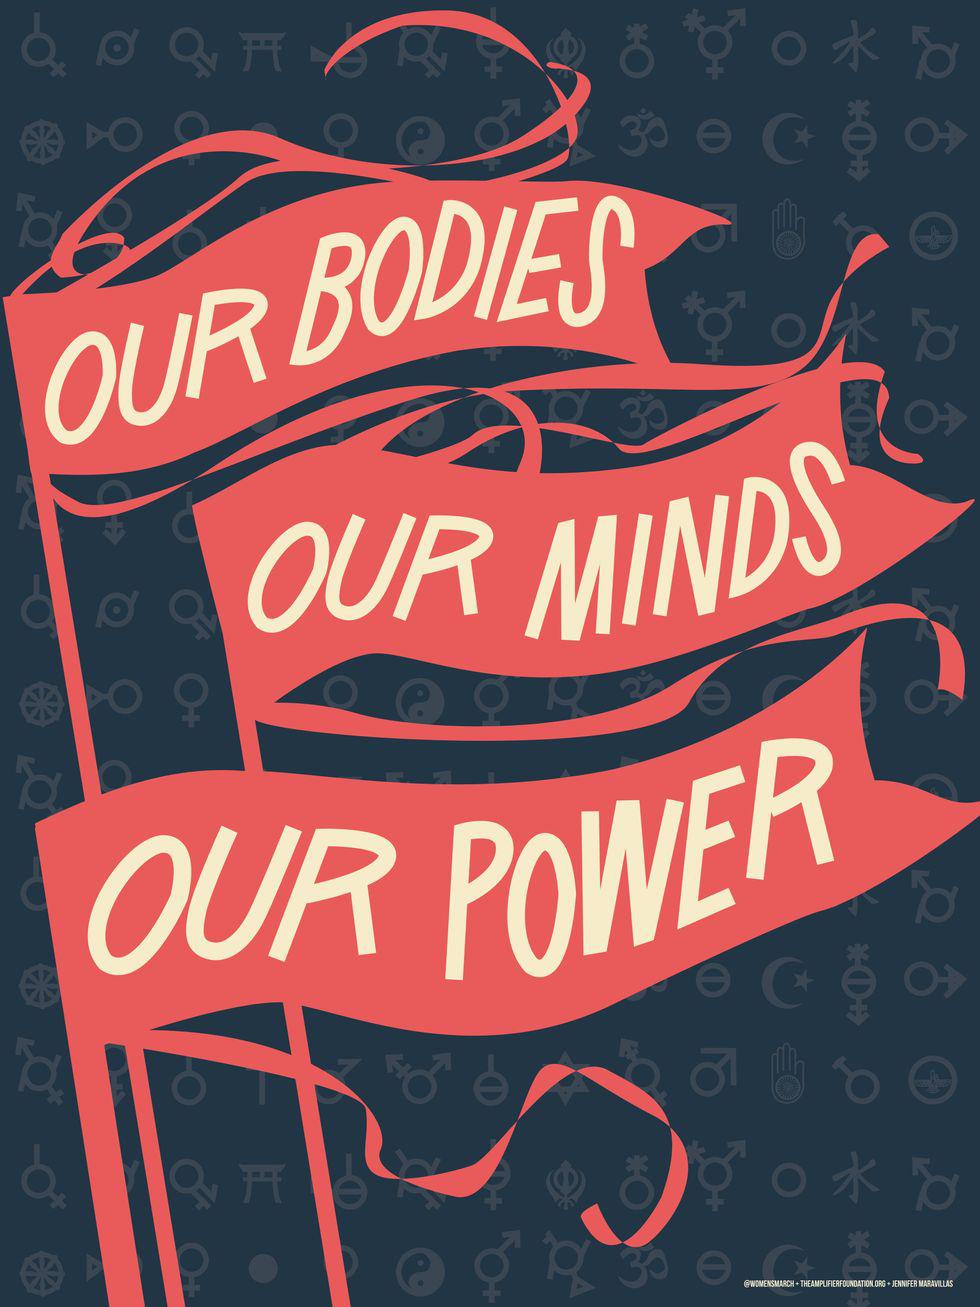 Women's March on Washington, Jennifer Maravillas, "Our Bodies Our Minds"